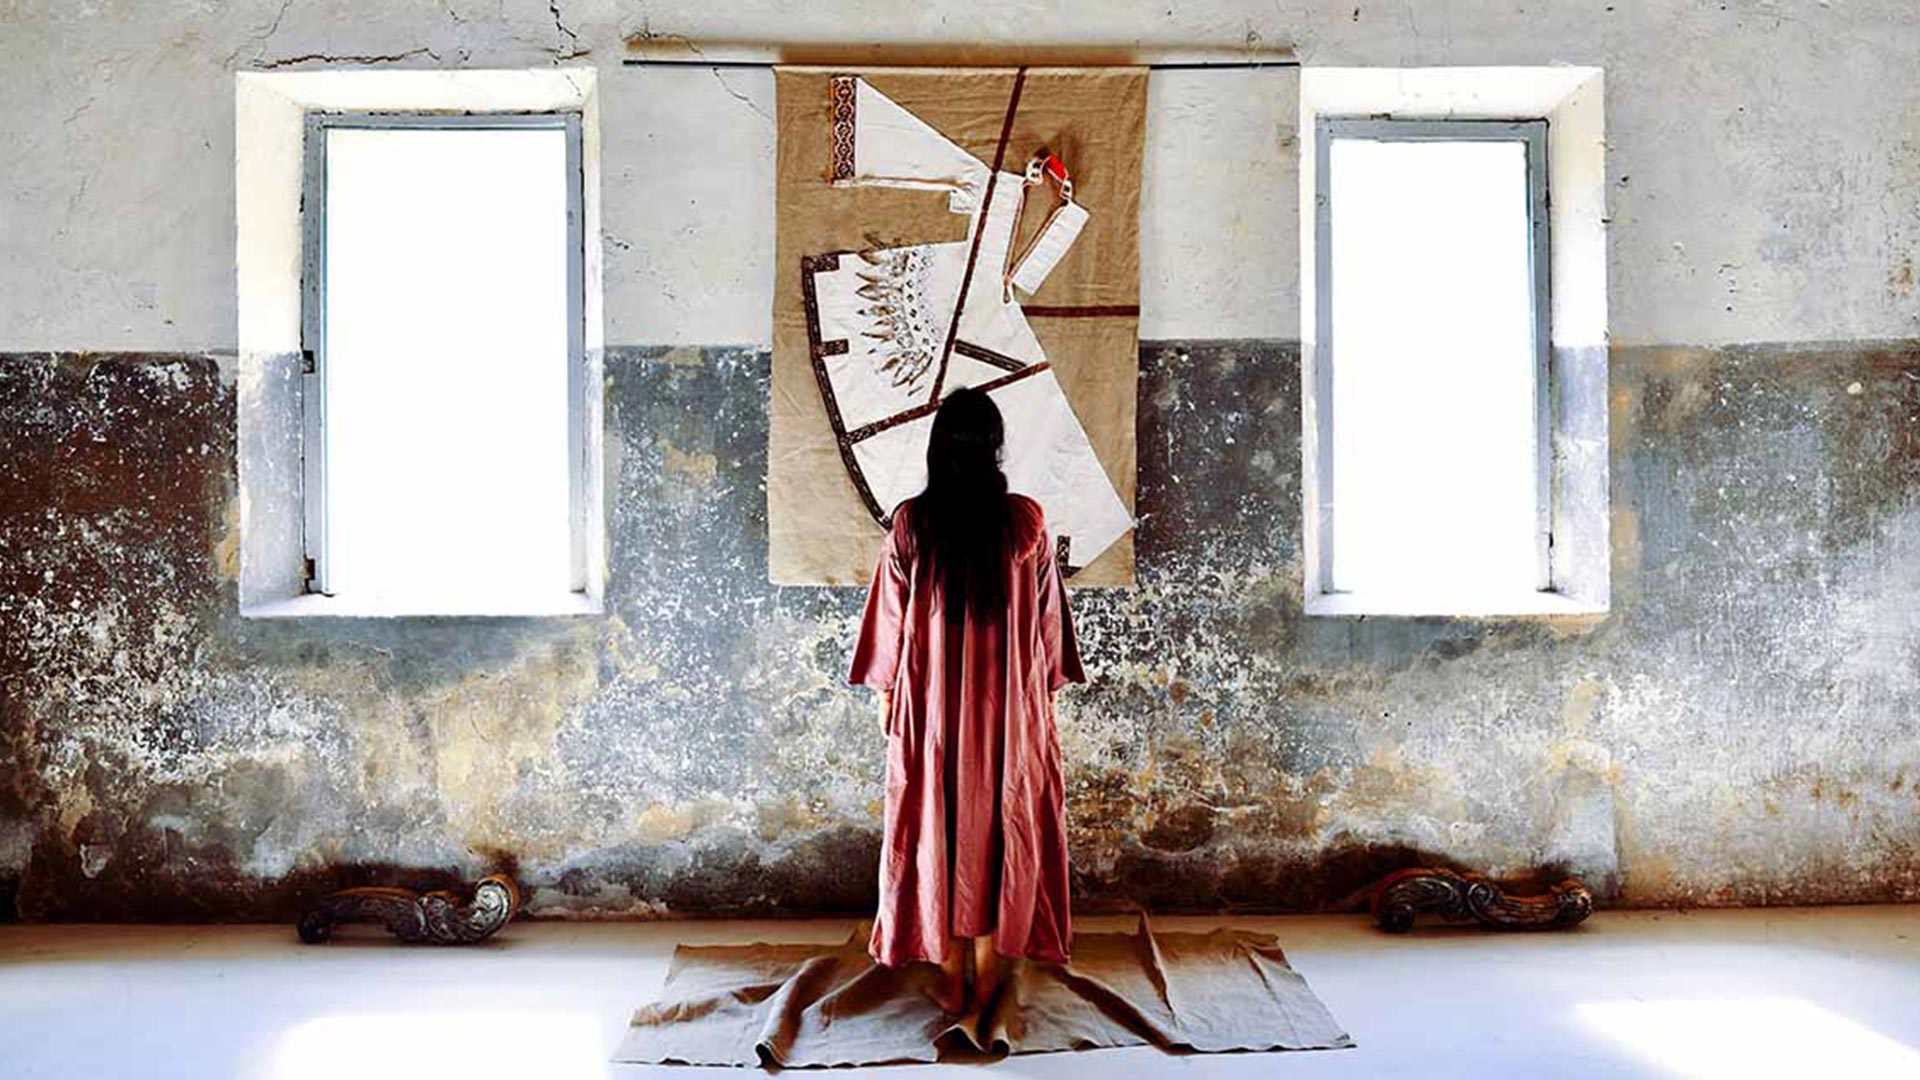 house-of-ita-s-trasposizioni-collection-explores-femininity-through-tapestry